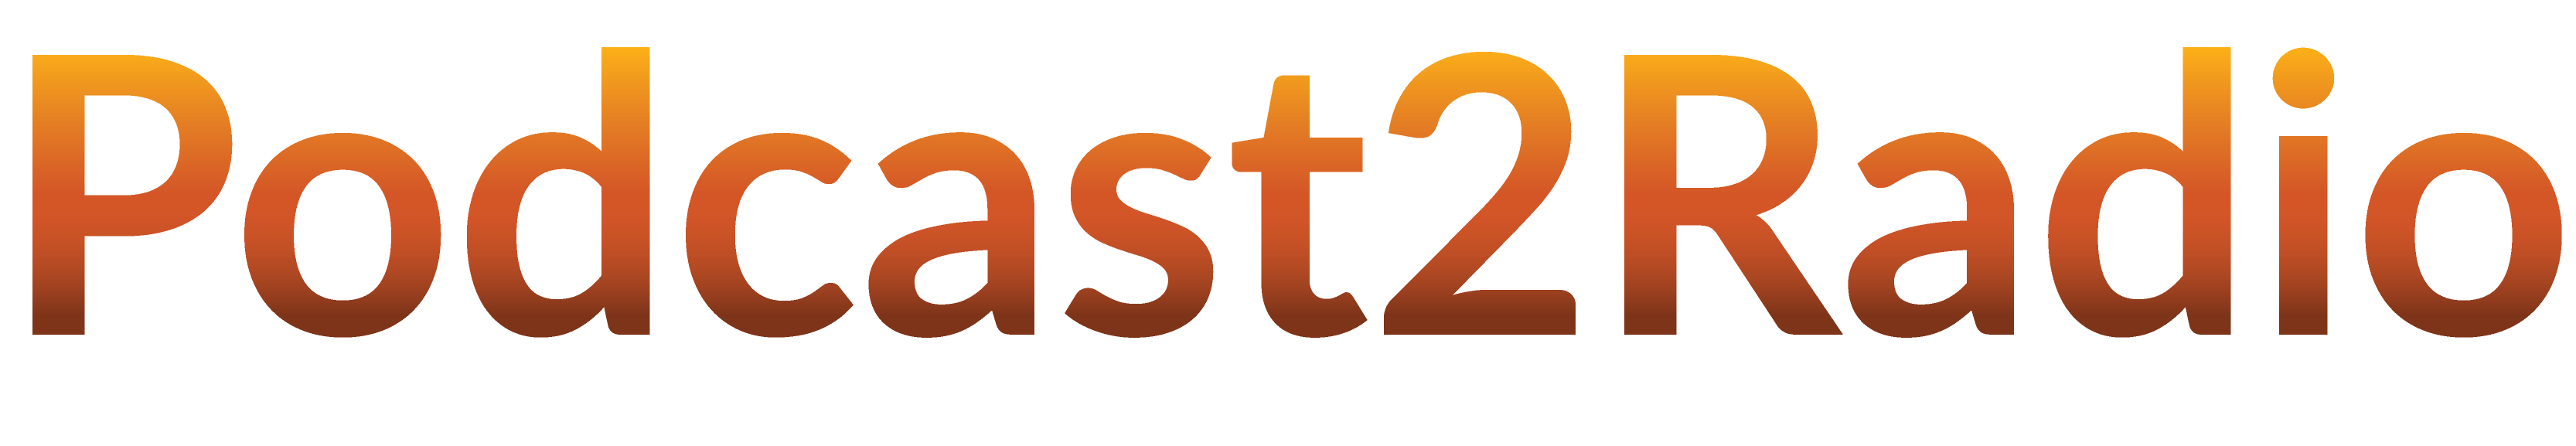 Podcast2Radio logo